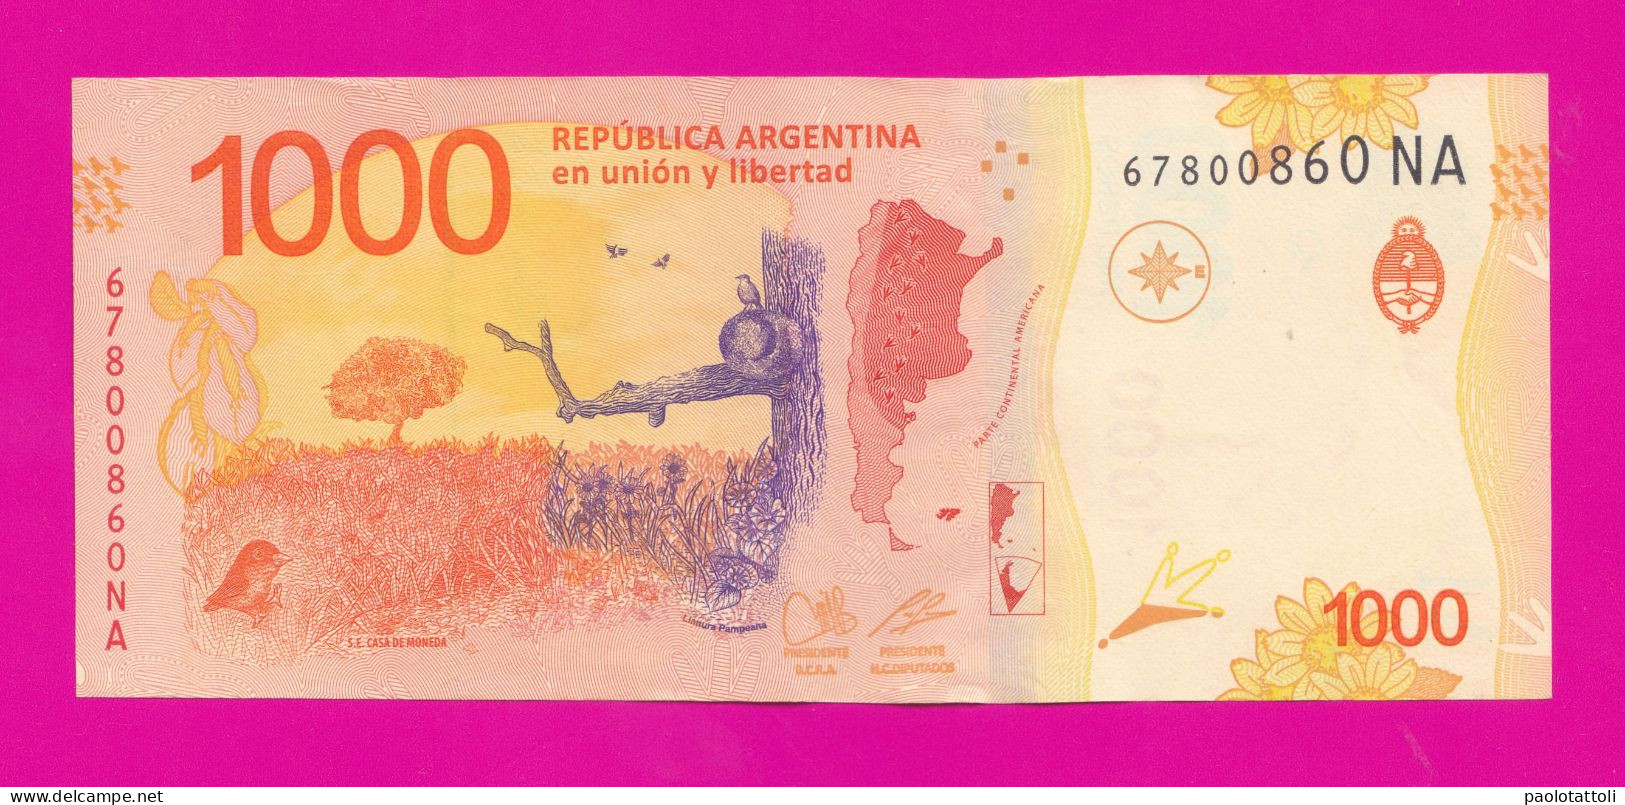 Argentina , 2020-2022- Suffix 59NA- 1000 Pesos. Obverse Hornero, National Bird. Reverse Pampa. - Argentina